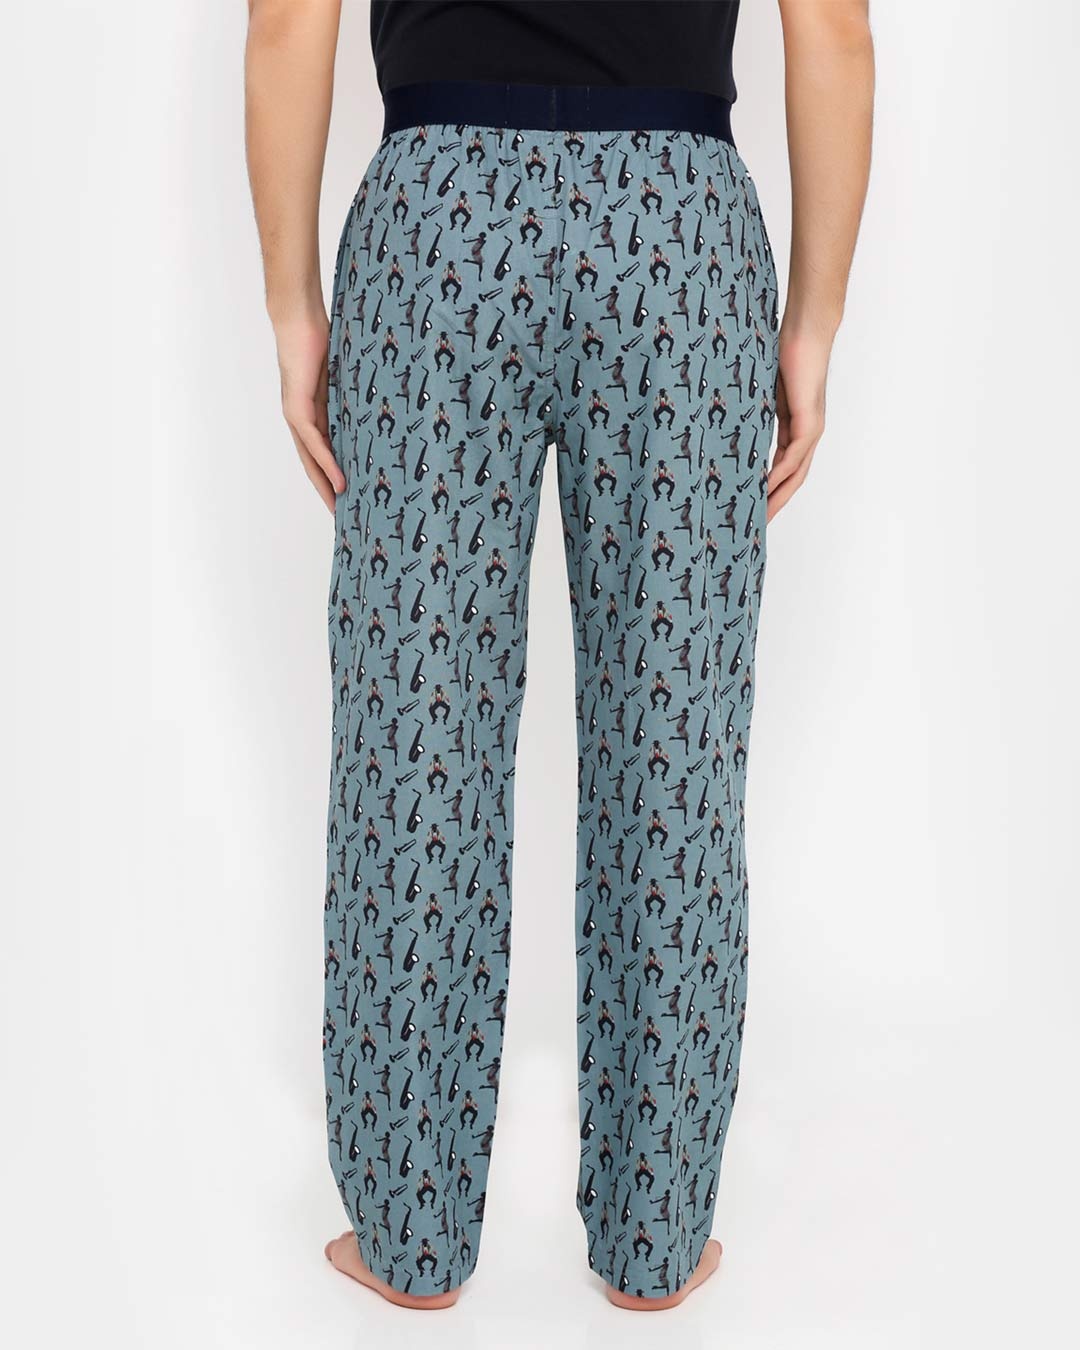 Shop Jazz Pyjamas Grey-Design